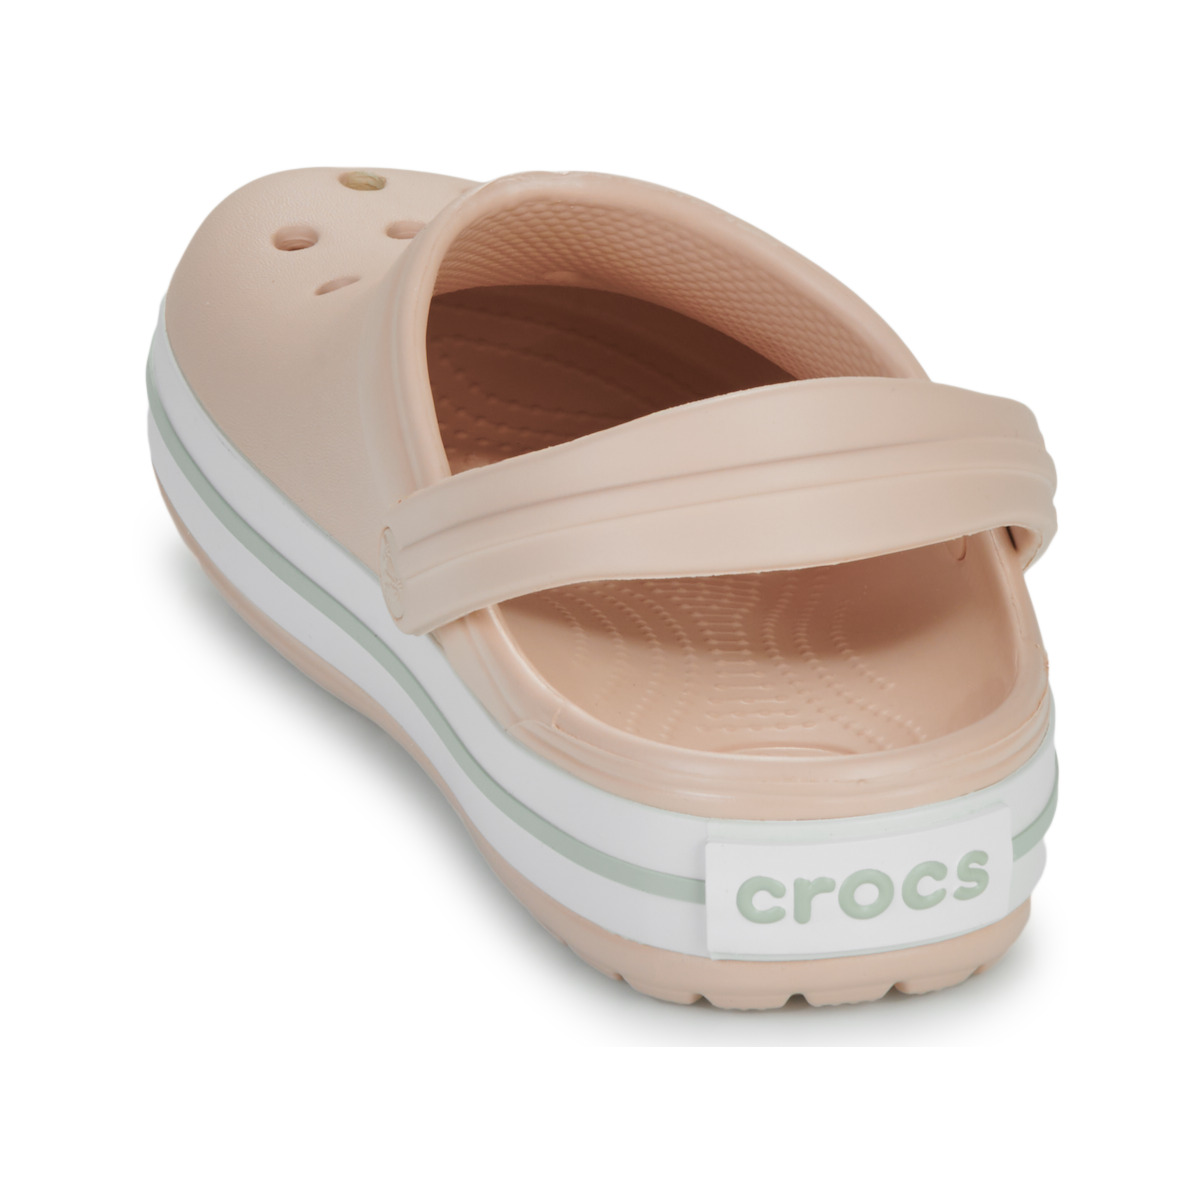 Crocs Rose Crocband 0oaMQKP3